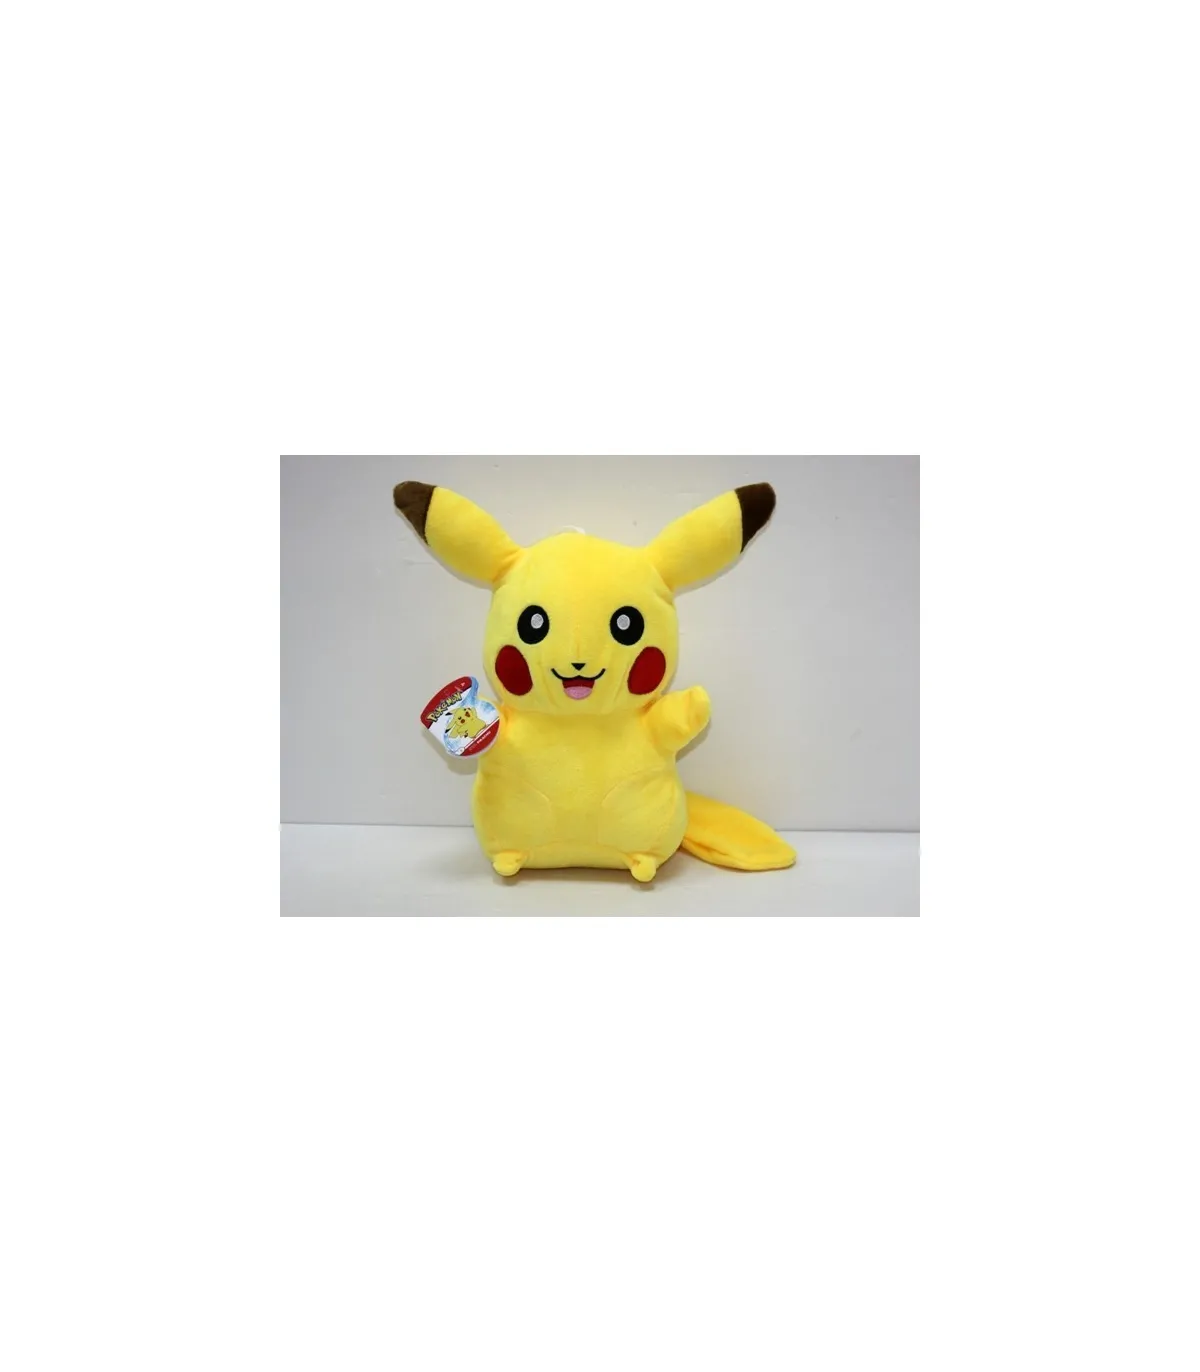 Compra ya tu Pikachu peluche de 65cm por solo 52,49 €